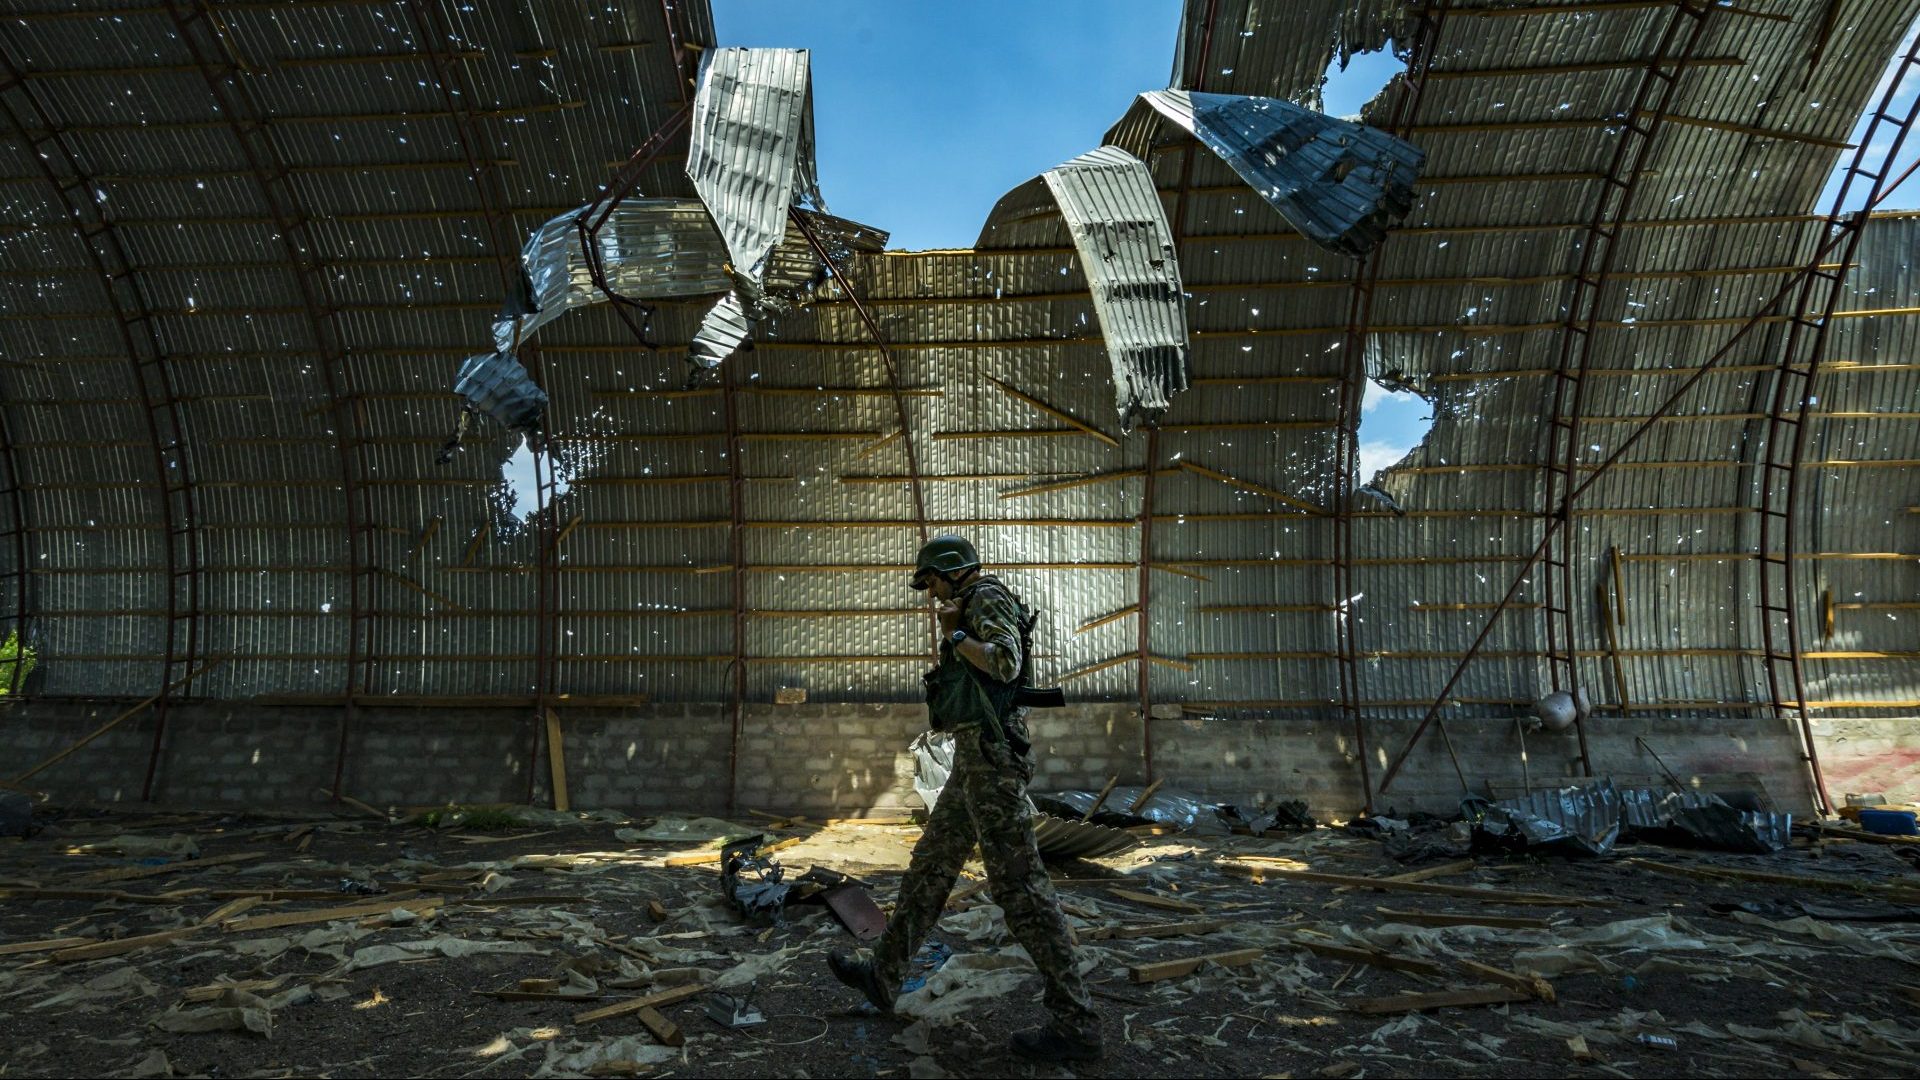 A Ukrainian soldier 
examines a barn 
destroyed by Russian shelling near the frontline in Zaporizhzhia province. Photo: Celestino Arce/NurPhoto/Getty